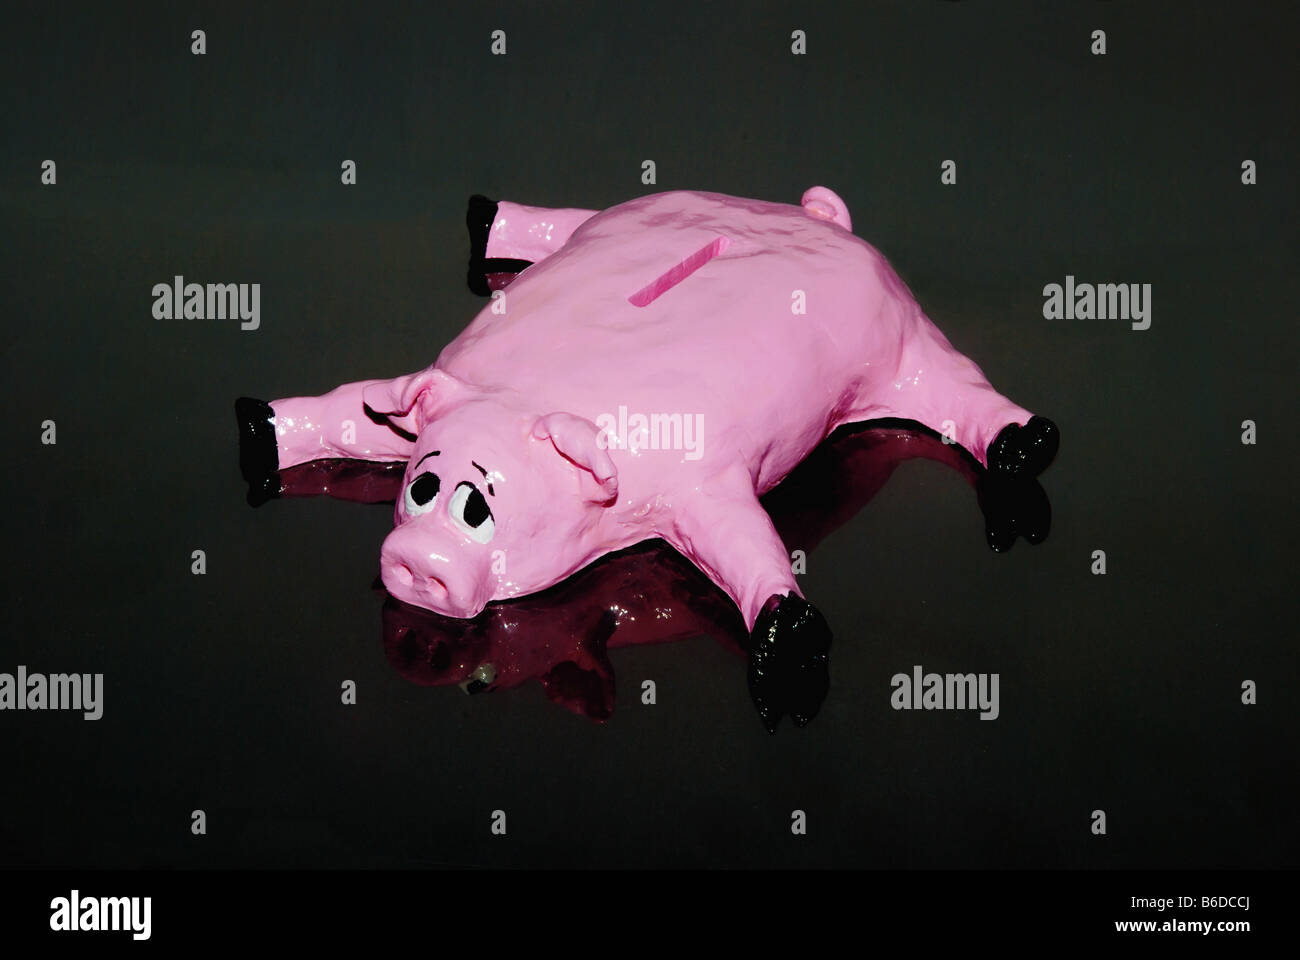 Crisis. Piggy bank. Stock Photo